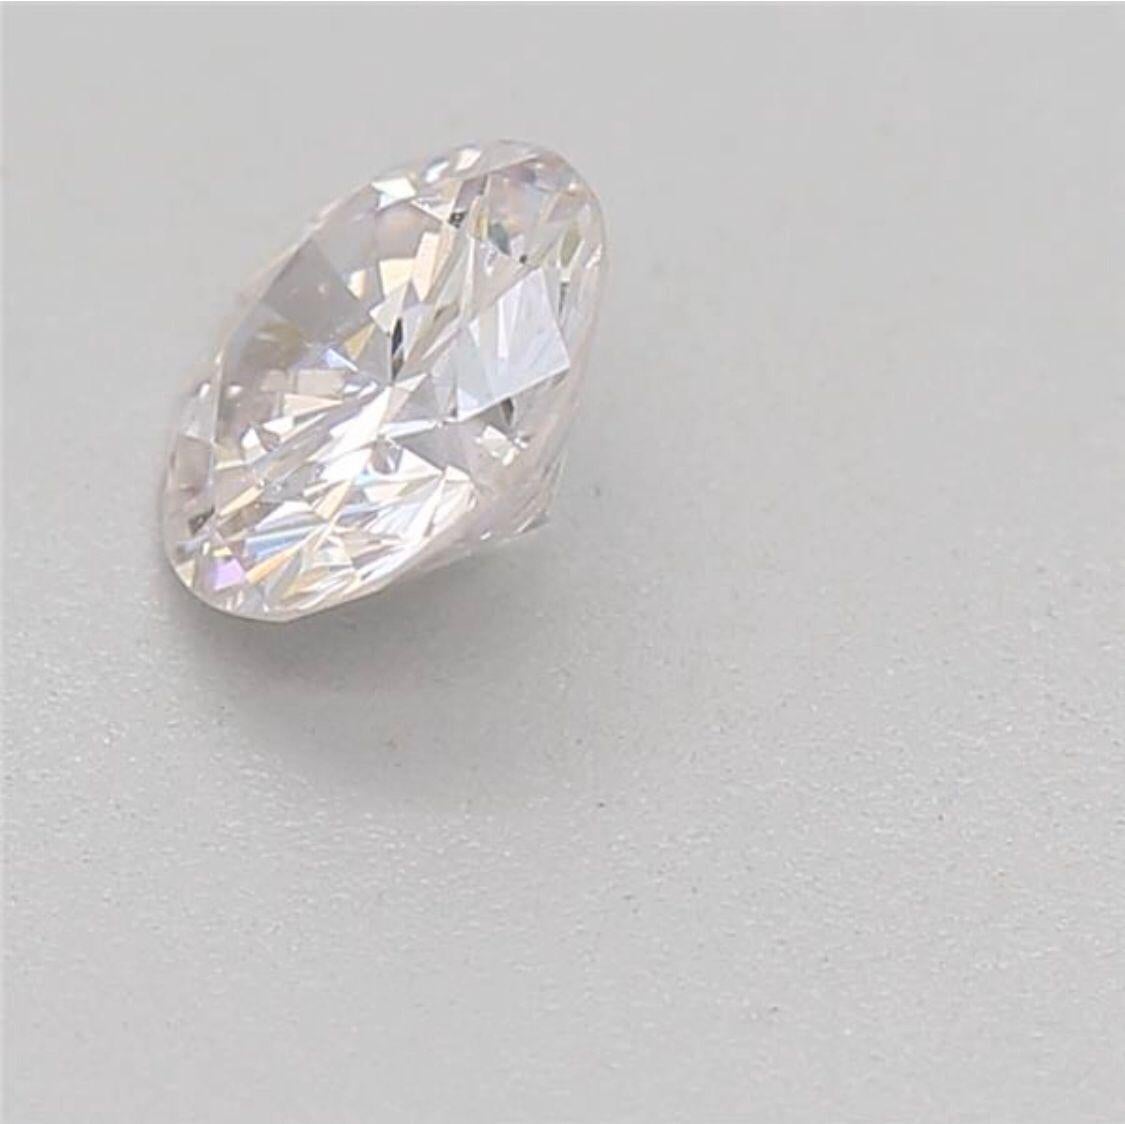 Diamant rose pâle taille ronde de 0,31 carat de pureté SI1 certifié CGL en vente 6